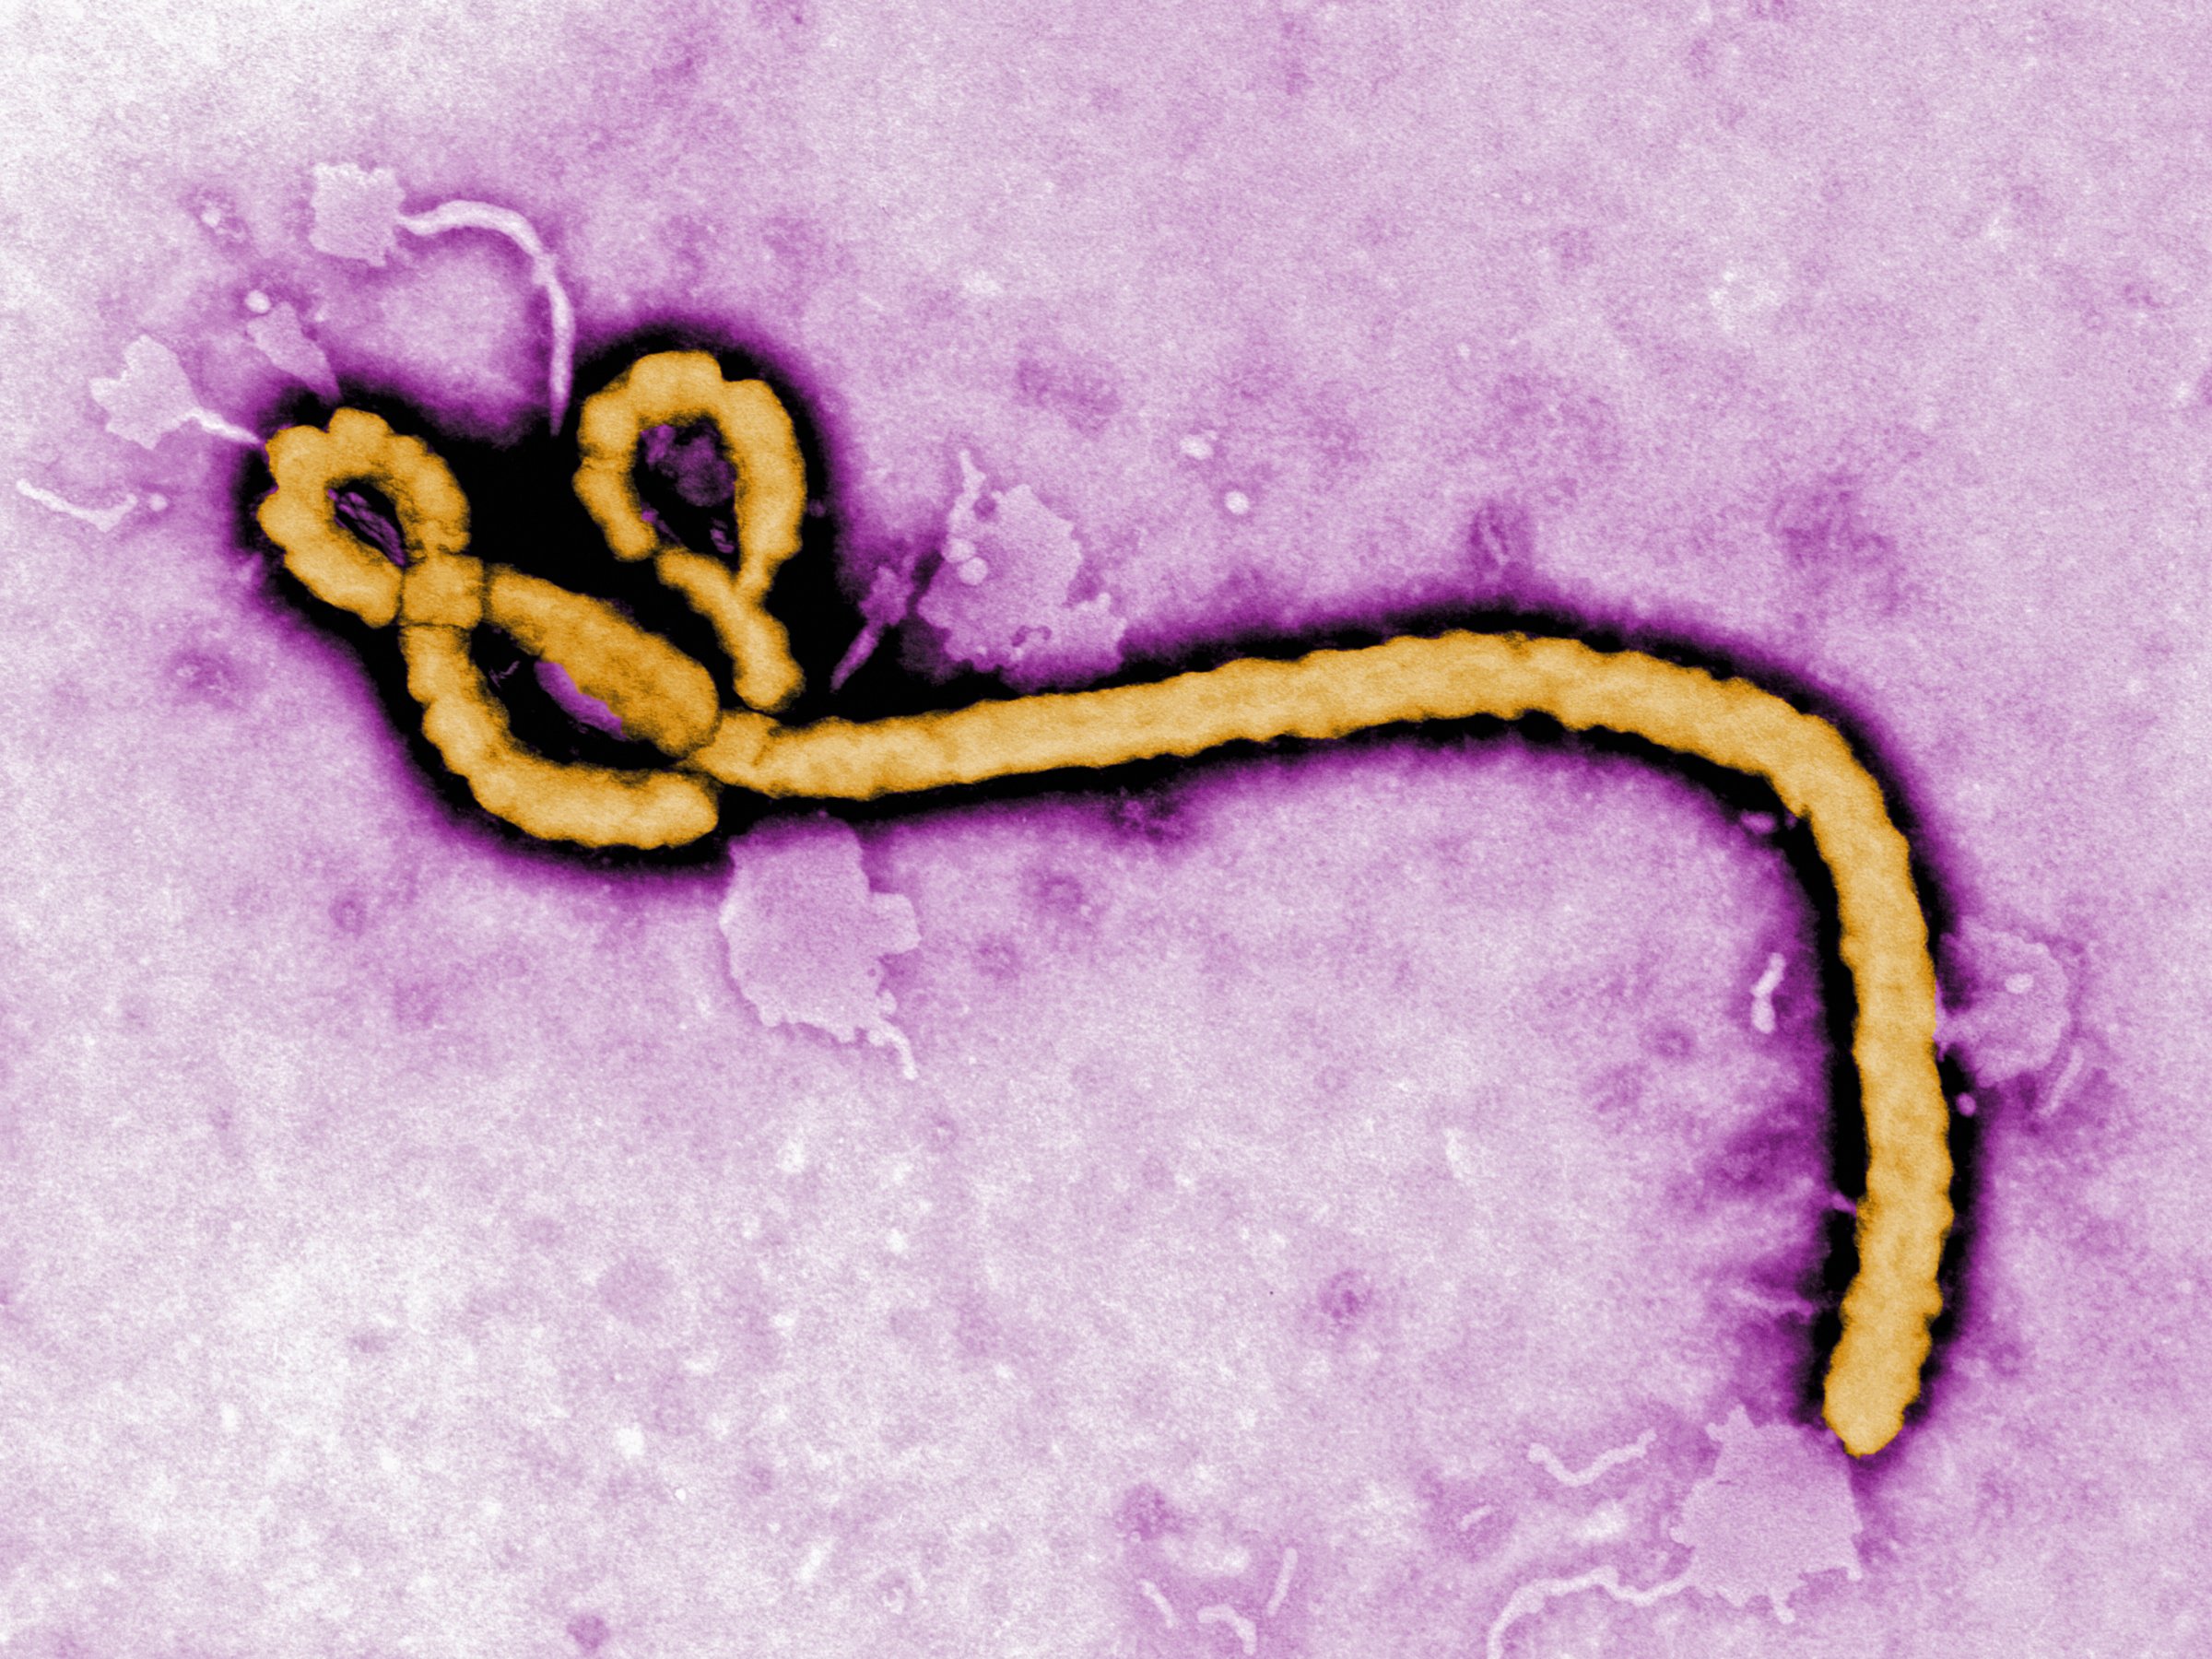 Ebola virus health problems